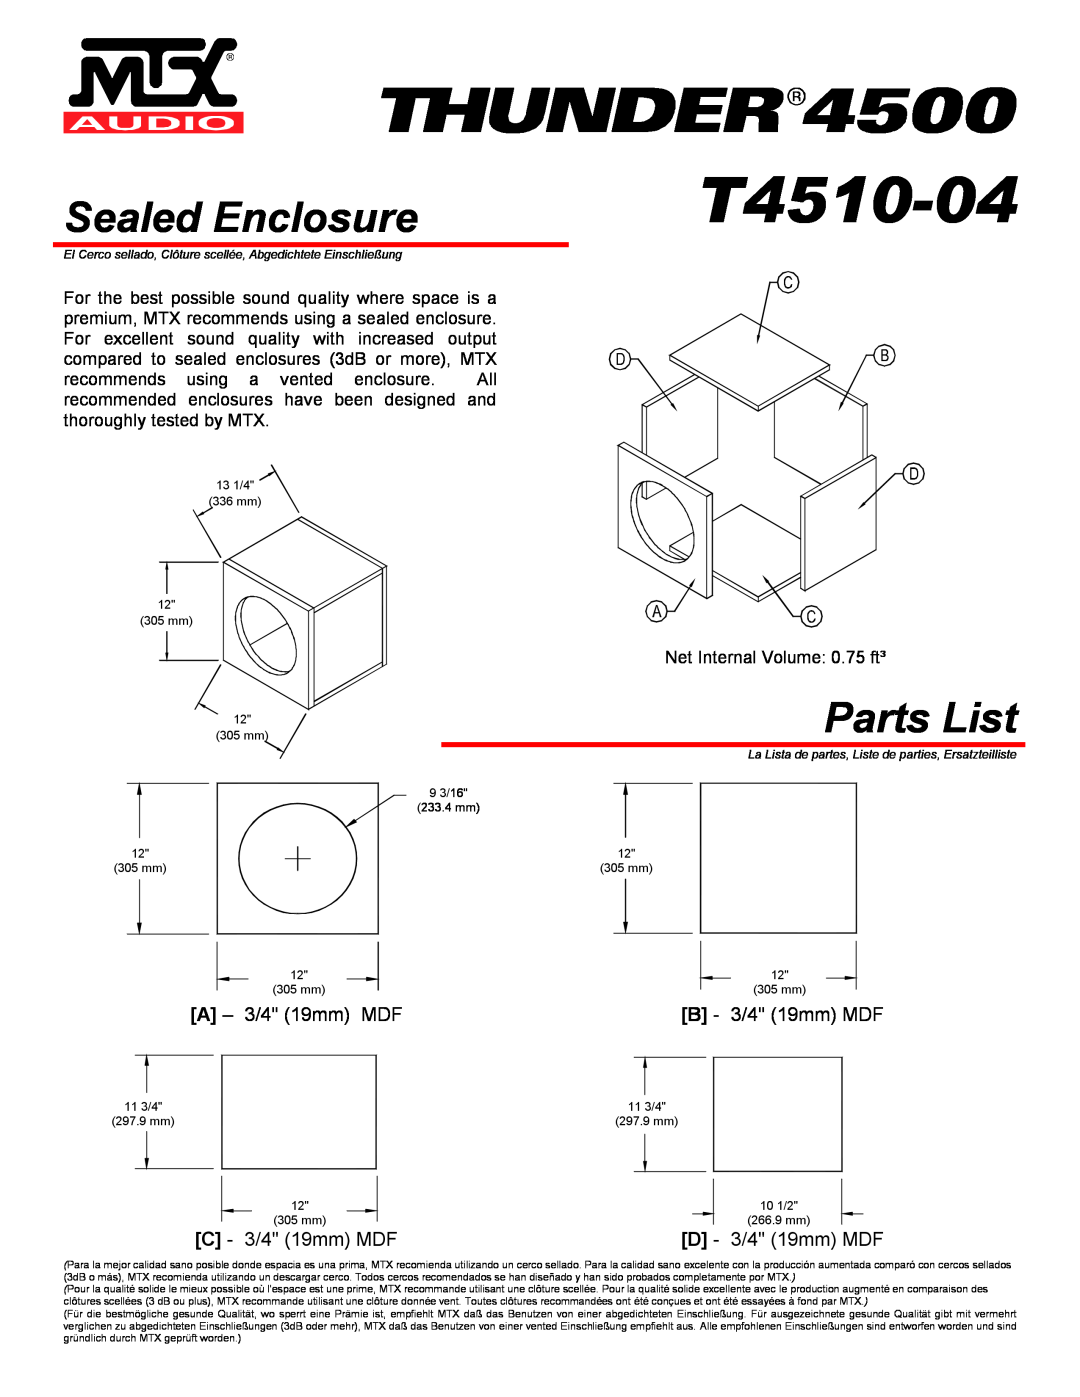 MTX Audio T4510-04 Sealed Enclosure, Parts List, A - 3/4 19mm MDF, B - 3/4 19mm MDF, C - 3/4 19mm MDF, D - 3/4 19mm MDF 